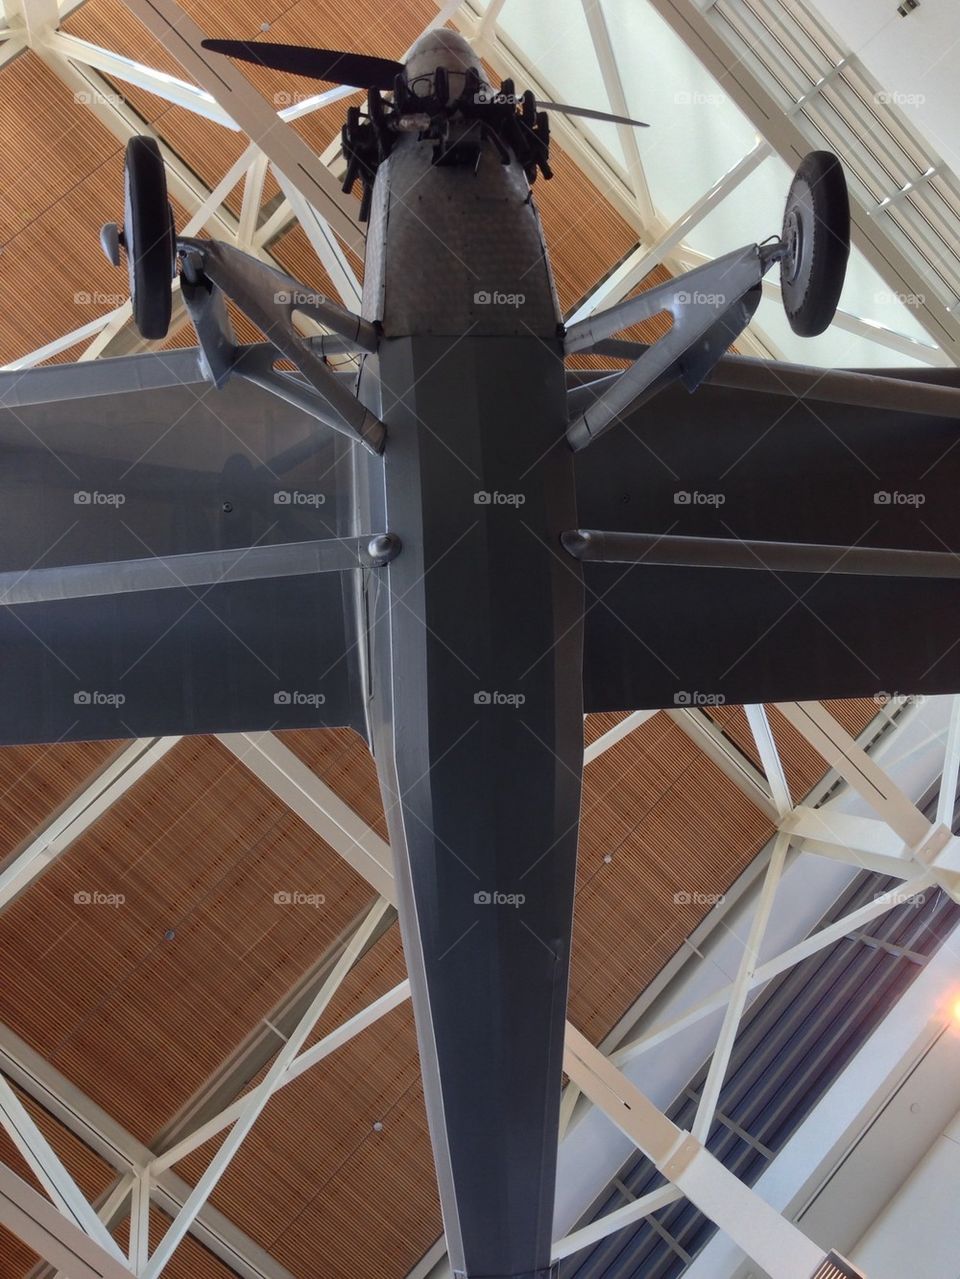 Lindbergh's Plane